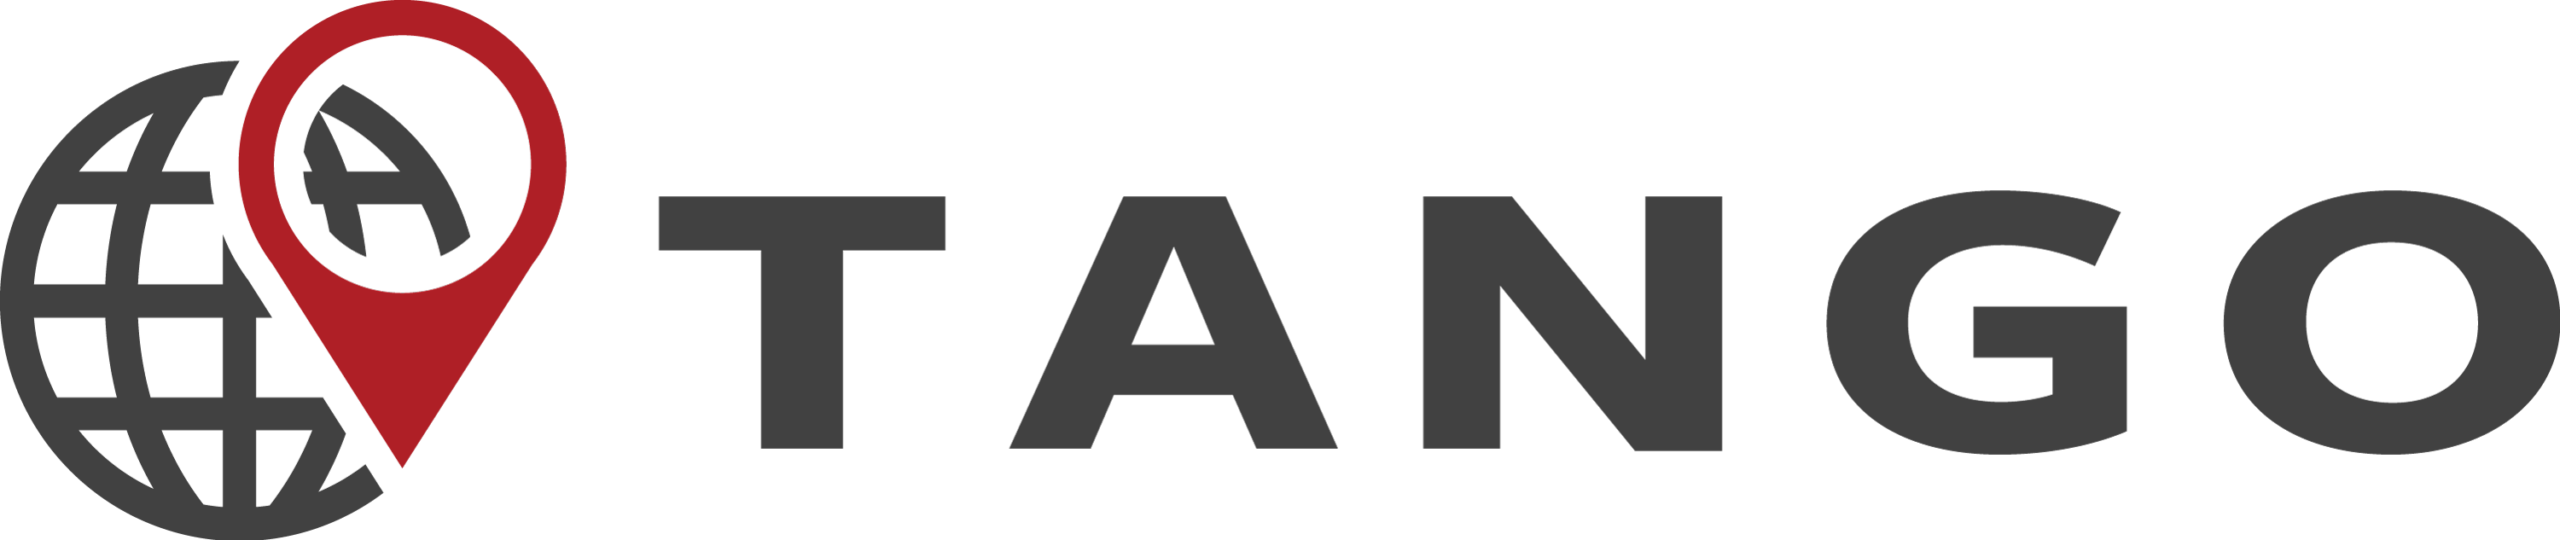 Tango Analytics logo